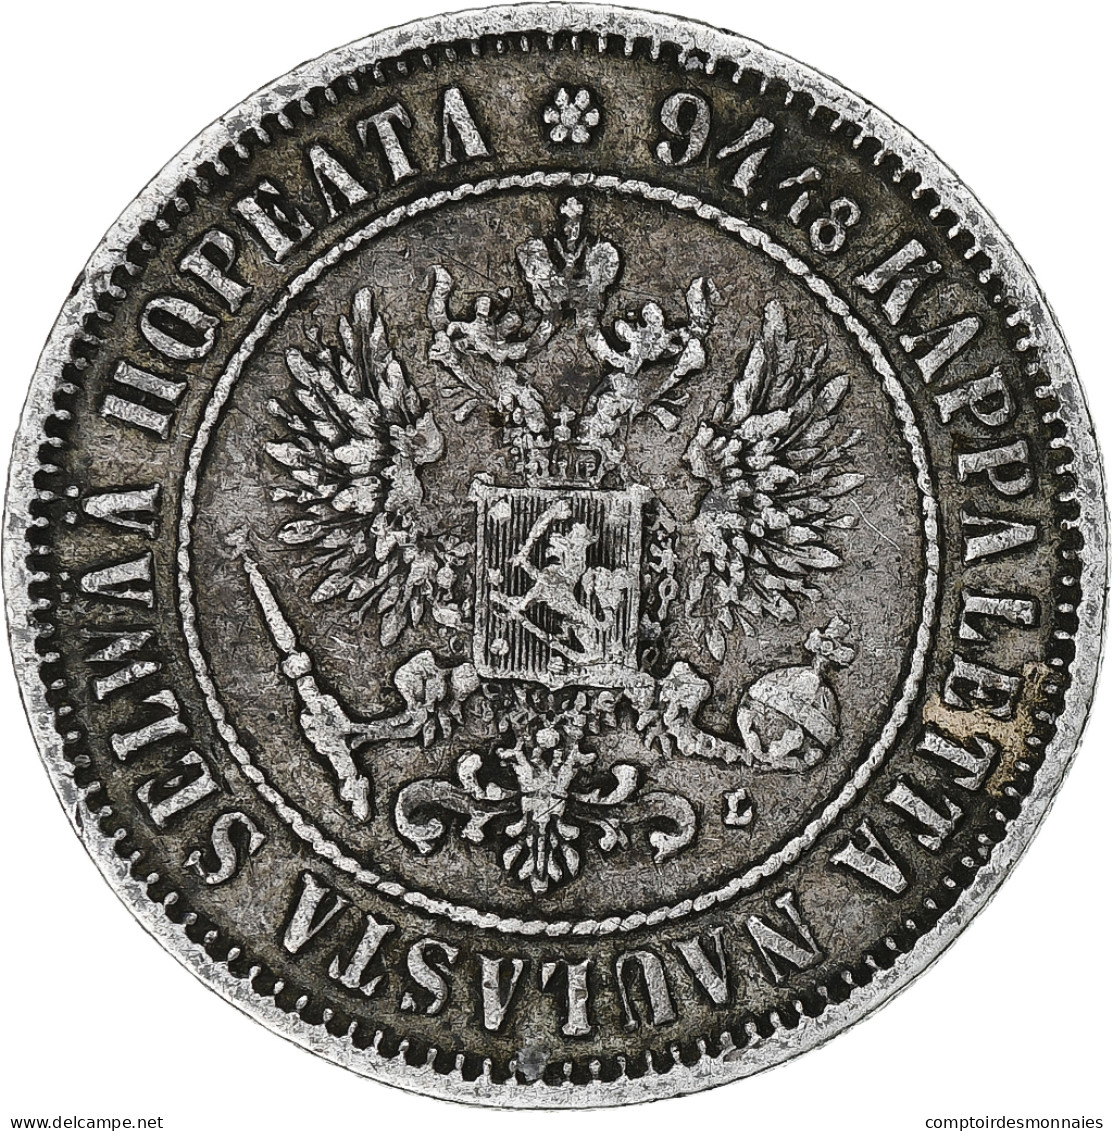 Finlande, Alexander III, Markka, 1892, Helsinki, Argent, TTB+, KM:3.2 - Finland